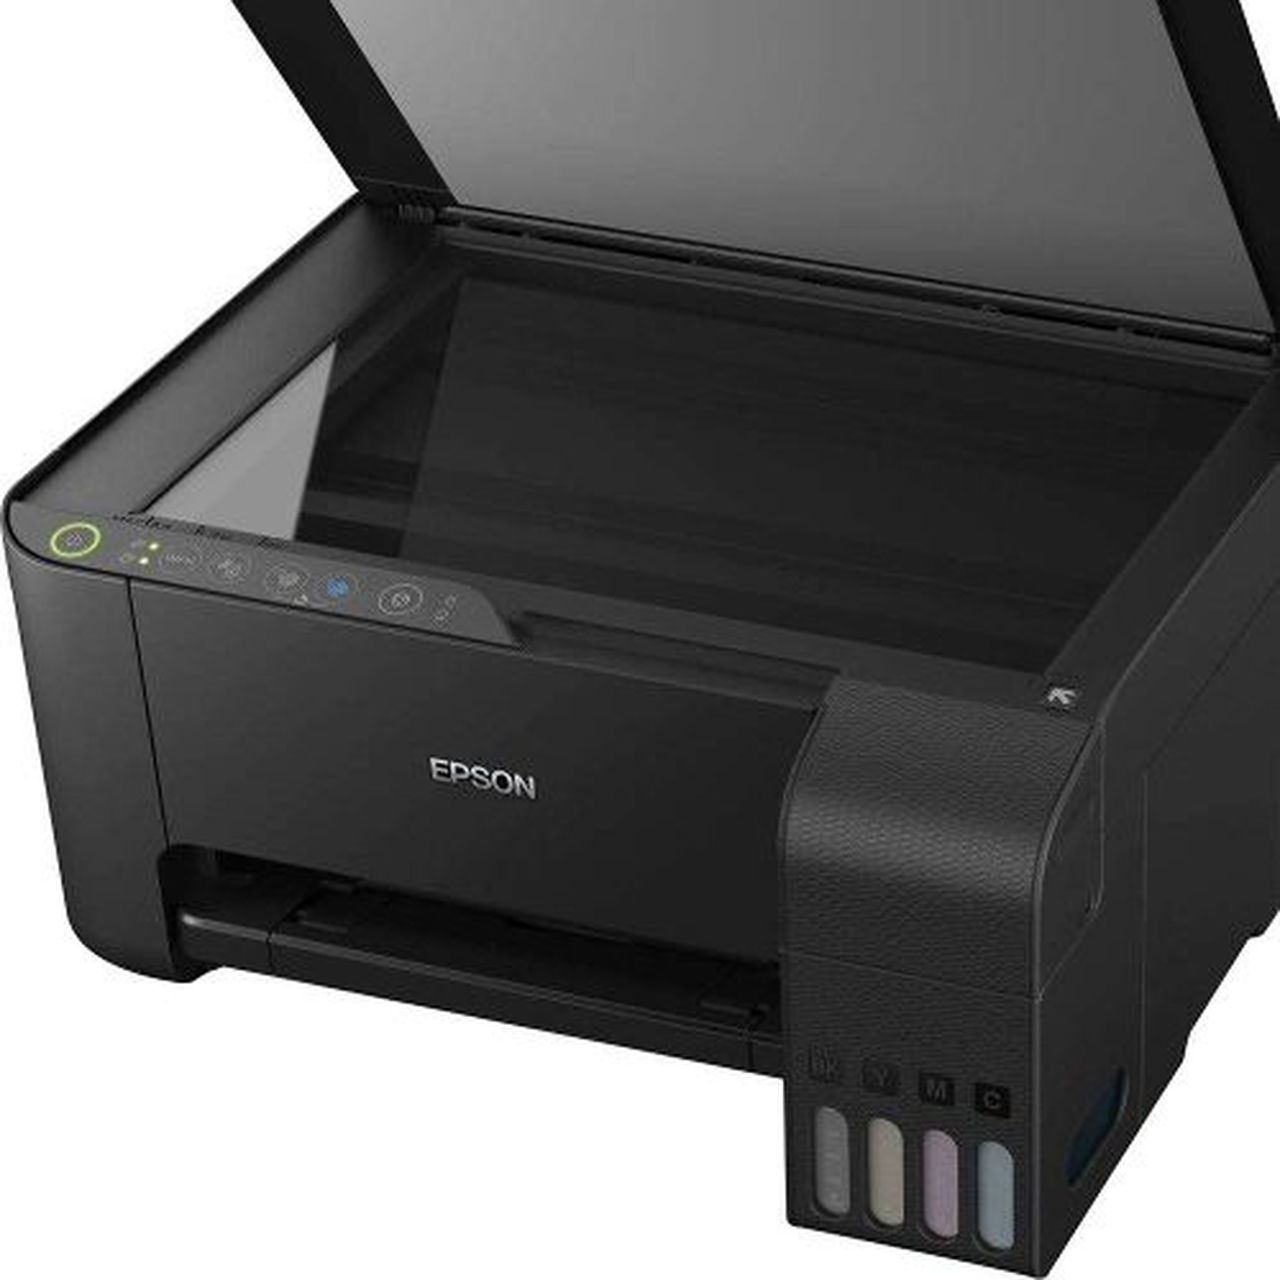 Impressora Multifuncional Epson L3150